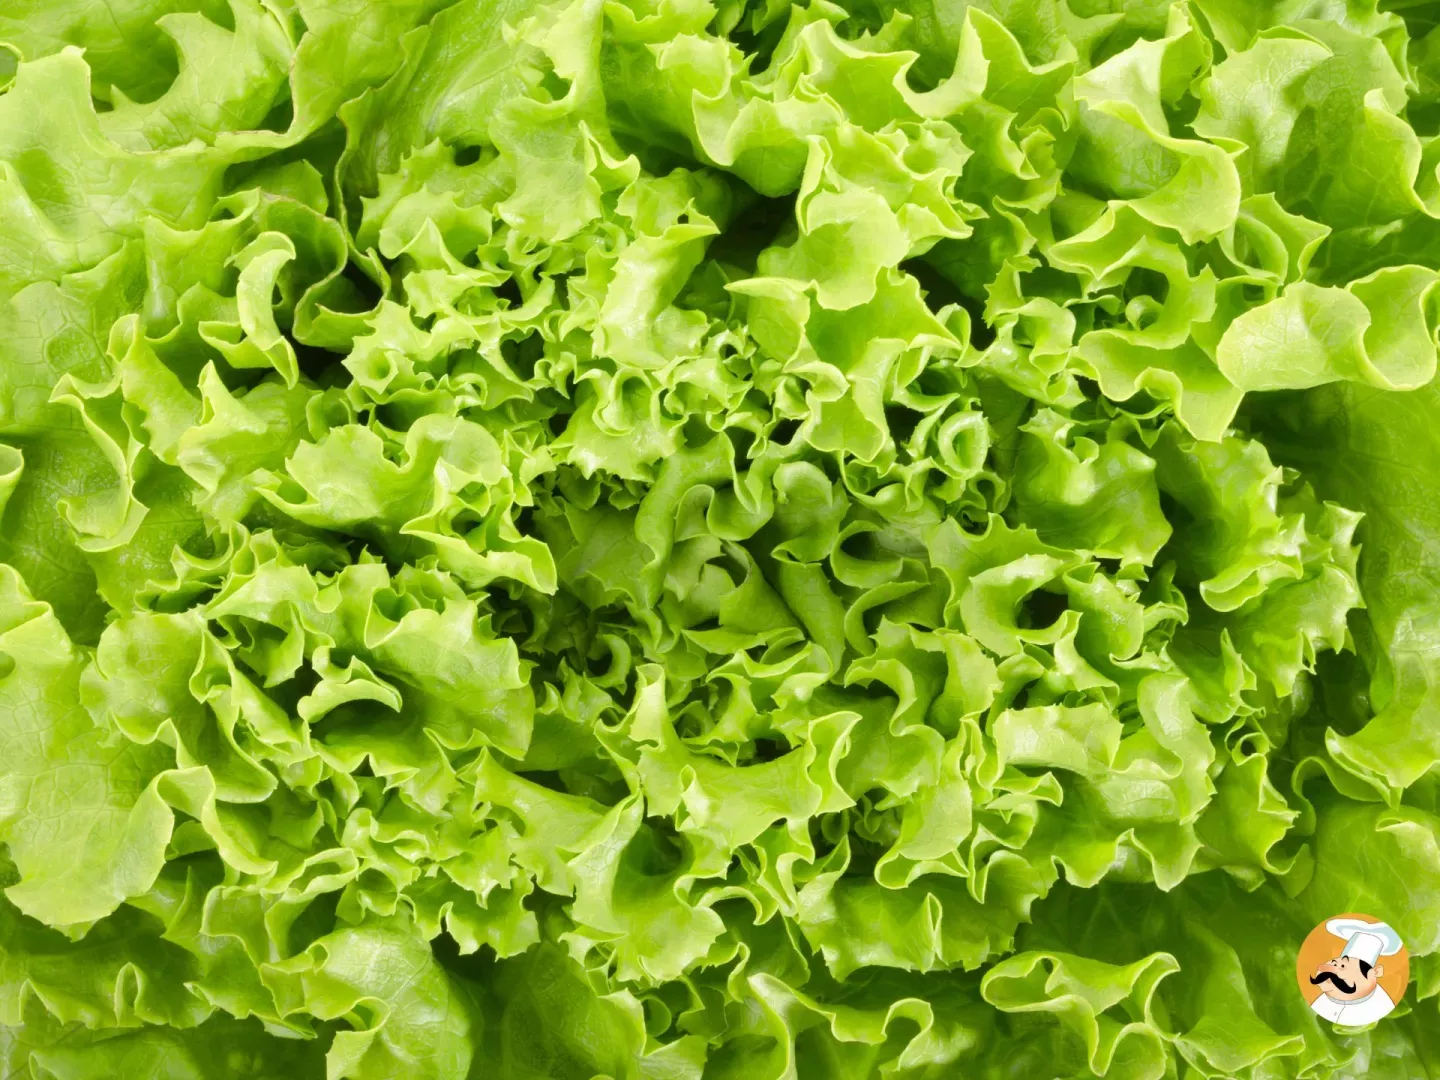 Comment effeuiller une salade verte super facilement ?